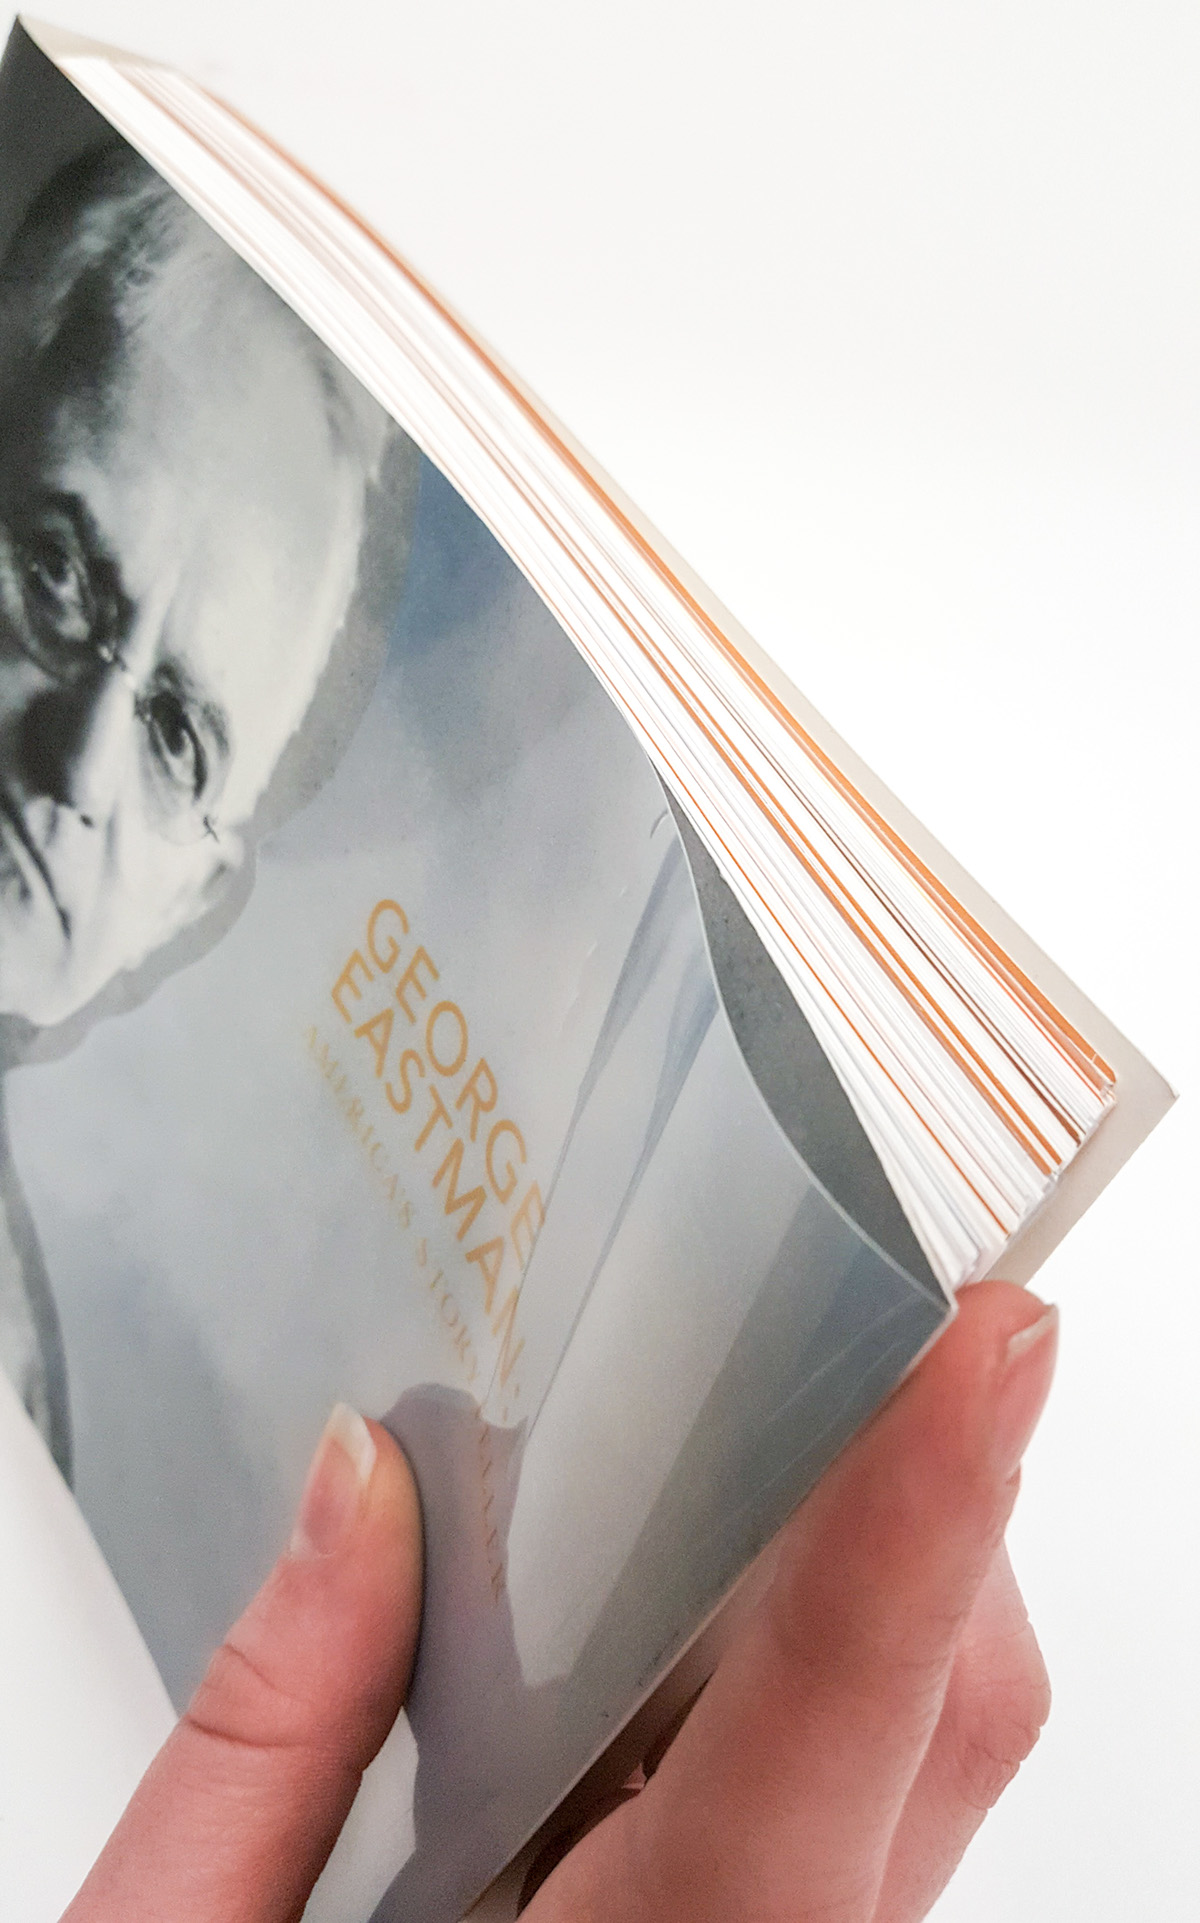 kodak George Eastman Photography  chapbook publication Hand-sewn binding perfect bind